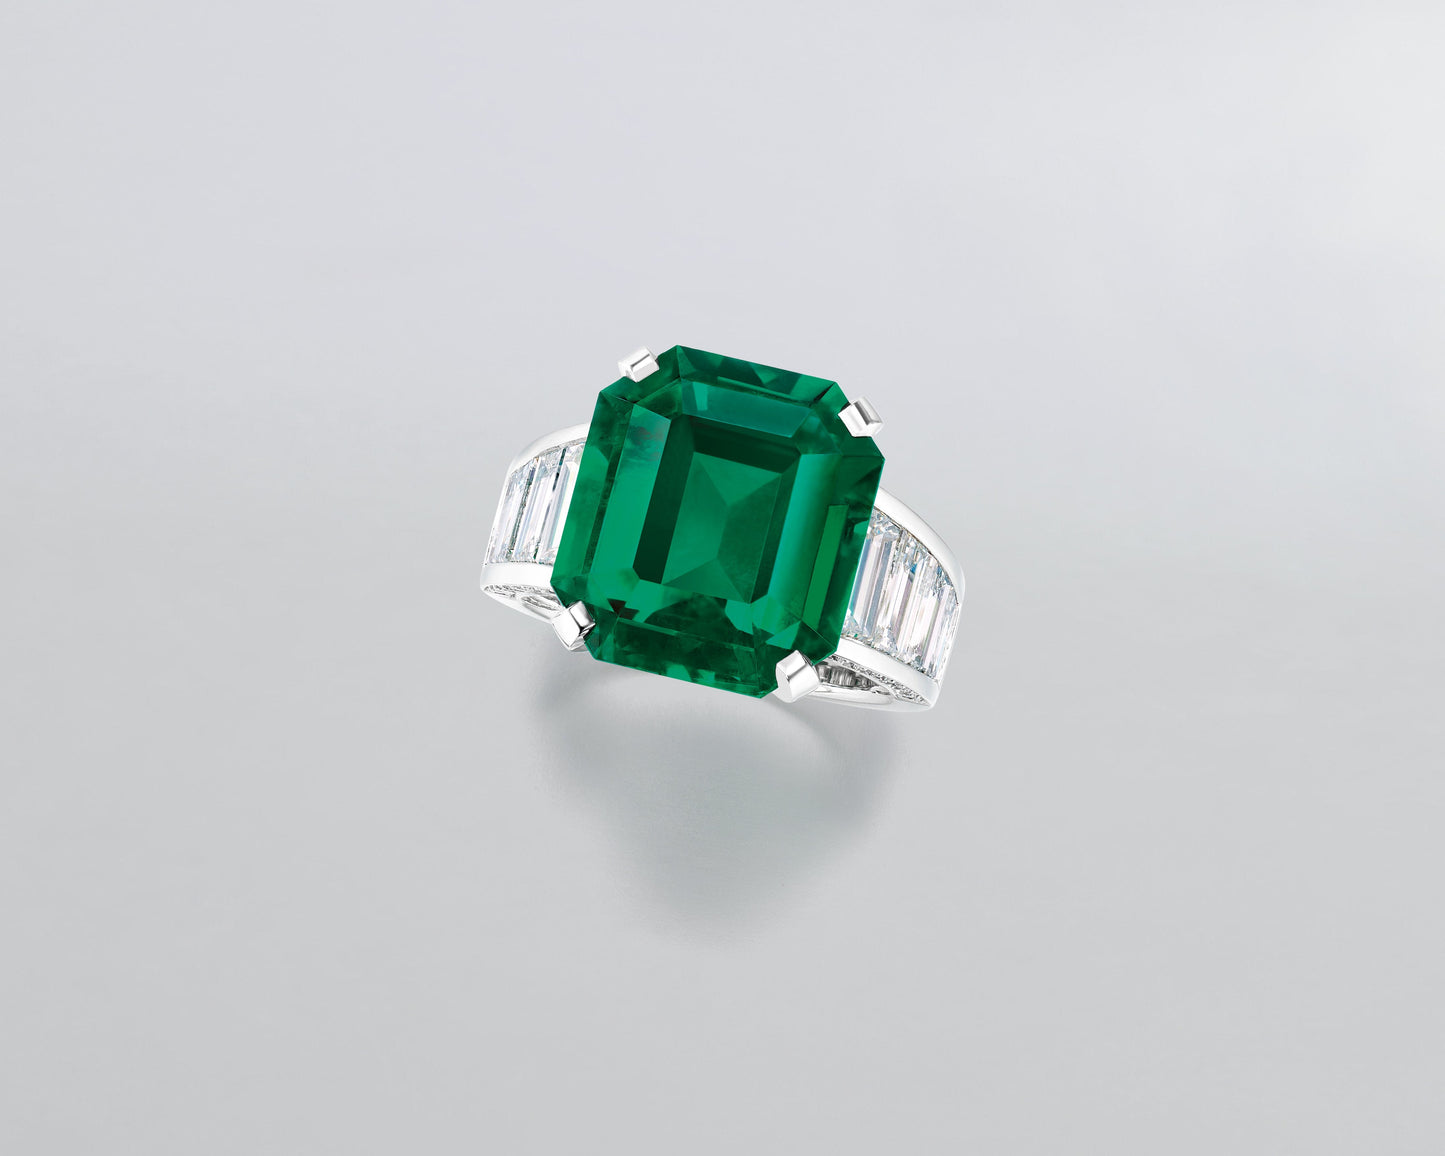 10.66 carat Emerald Cut Colombian Emerald Ring